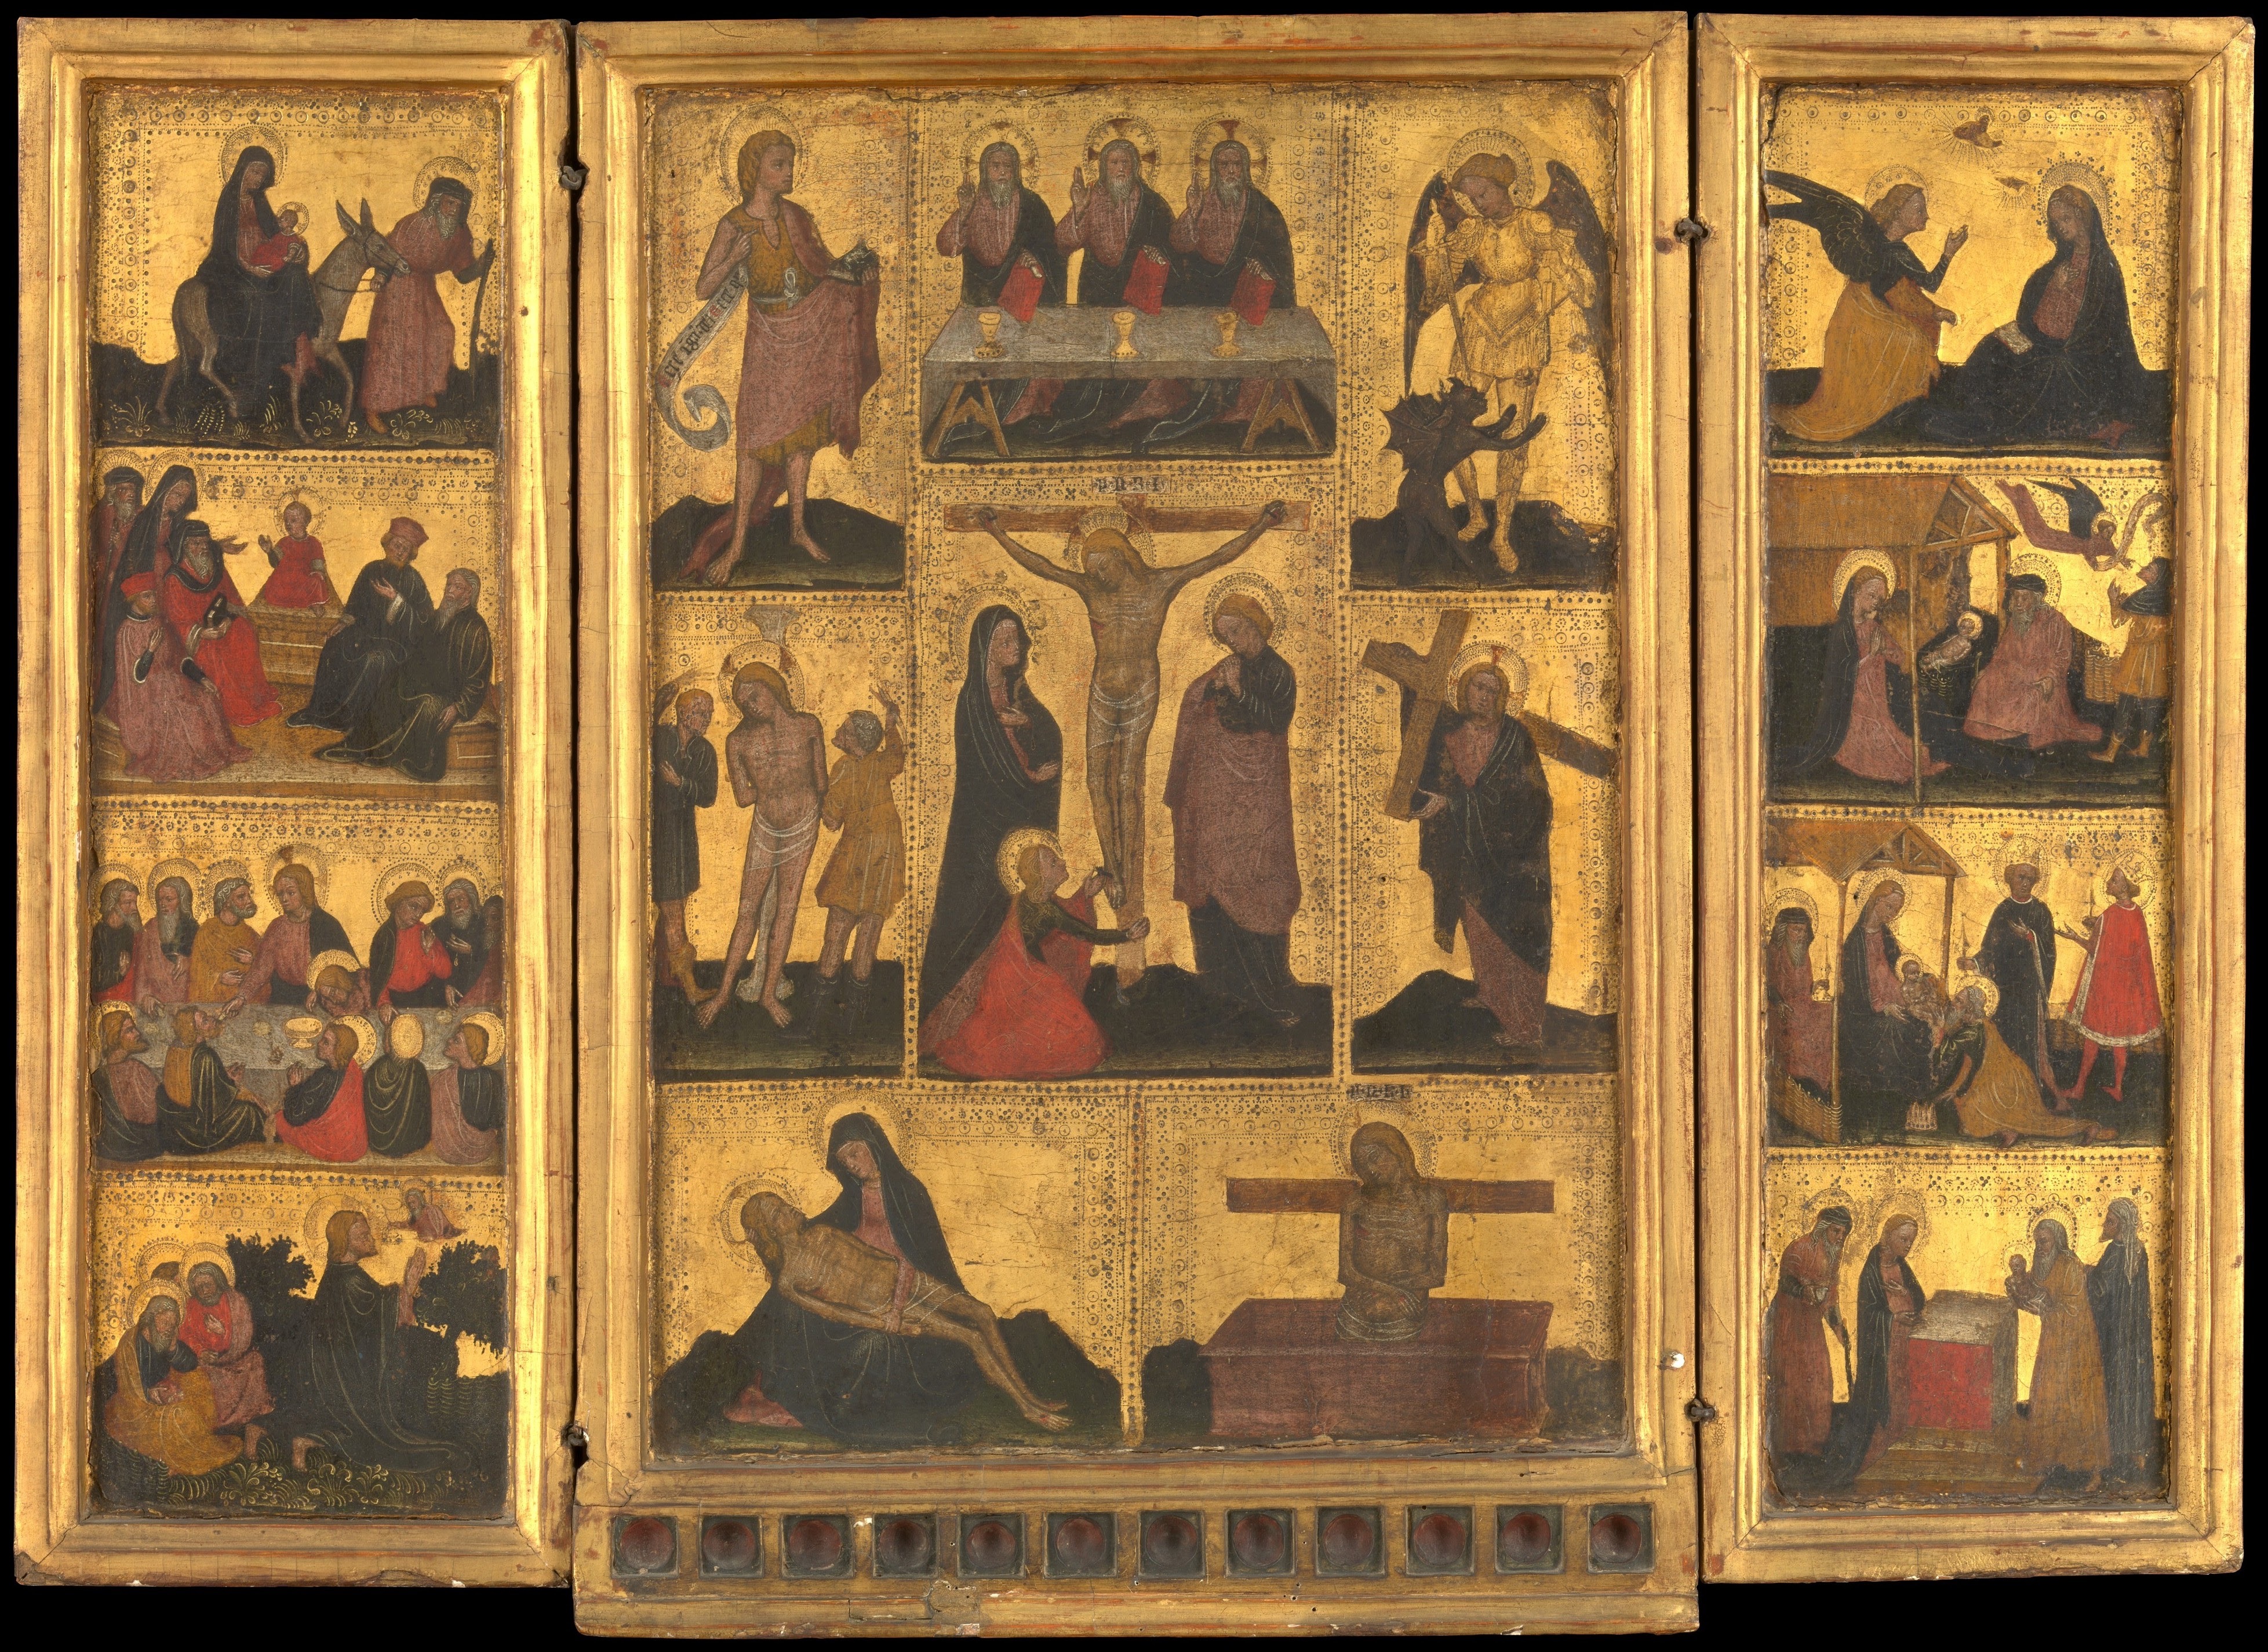 The Life of Christ - The Metropolitan Museum of Art